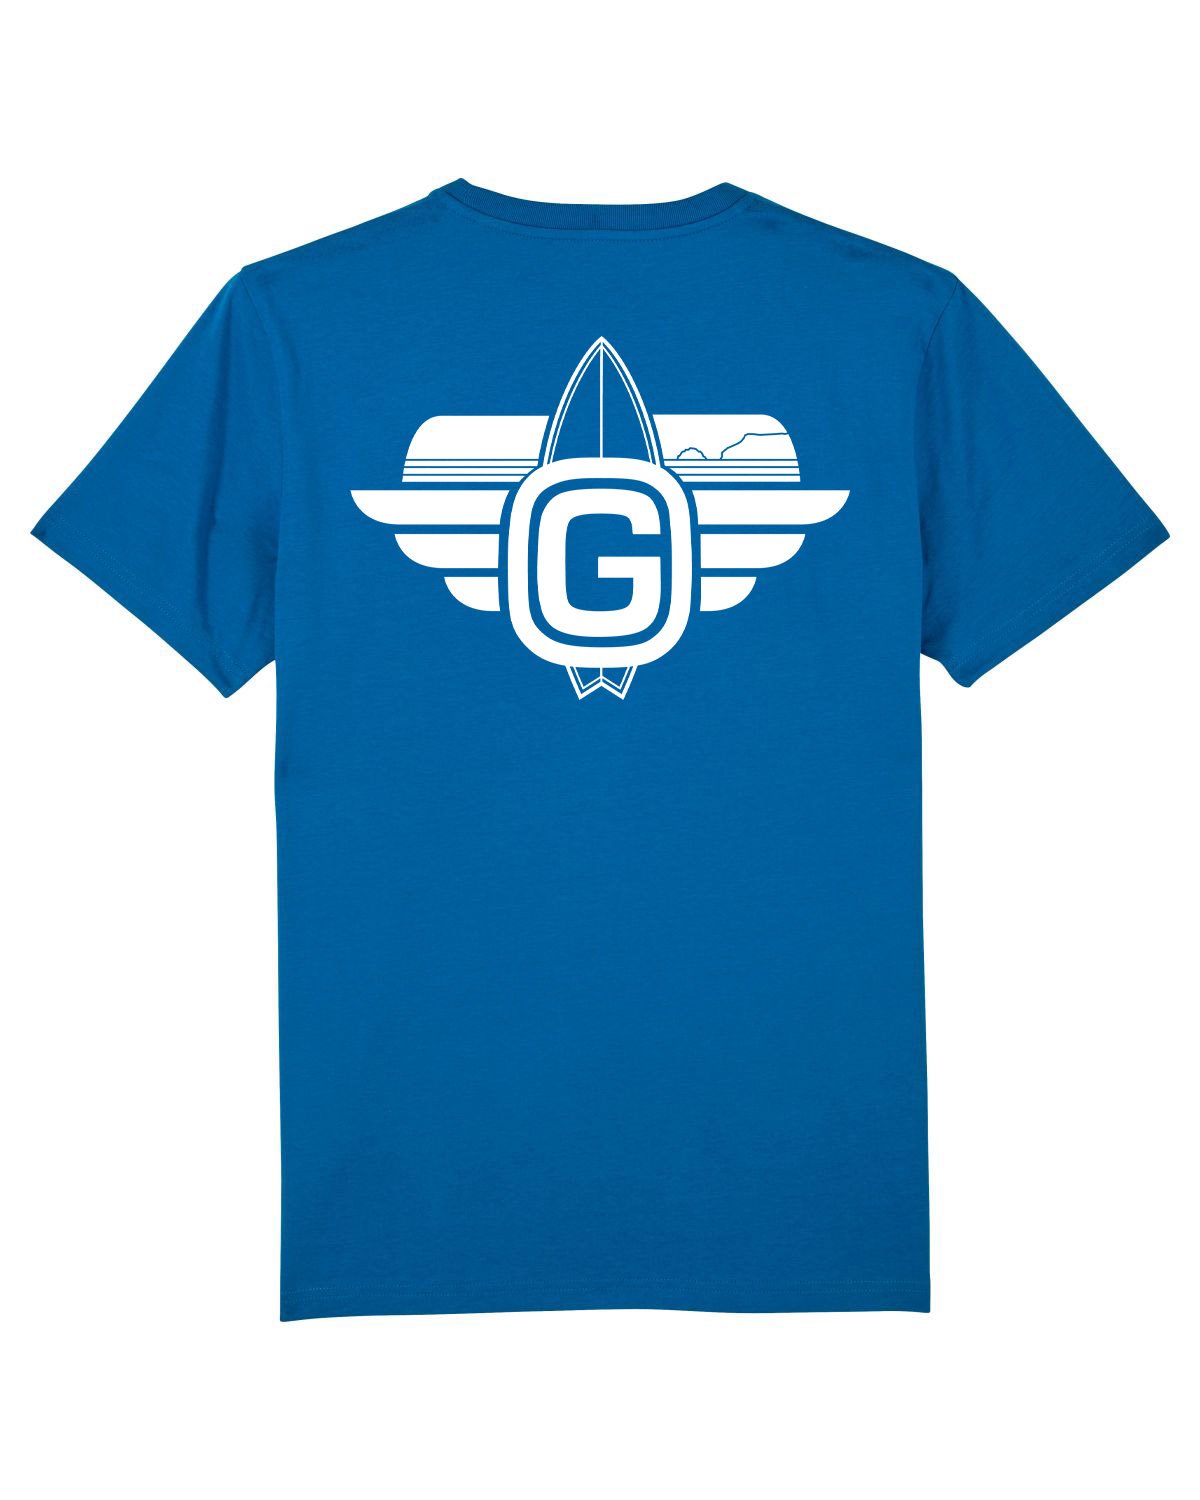 Adults G-Surf Classic Short Sleeve T-Shirt - Royal Blue